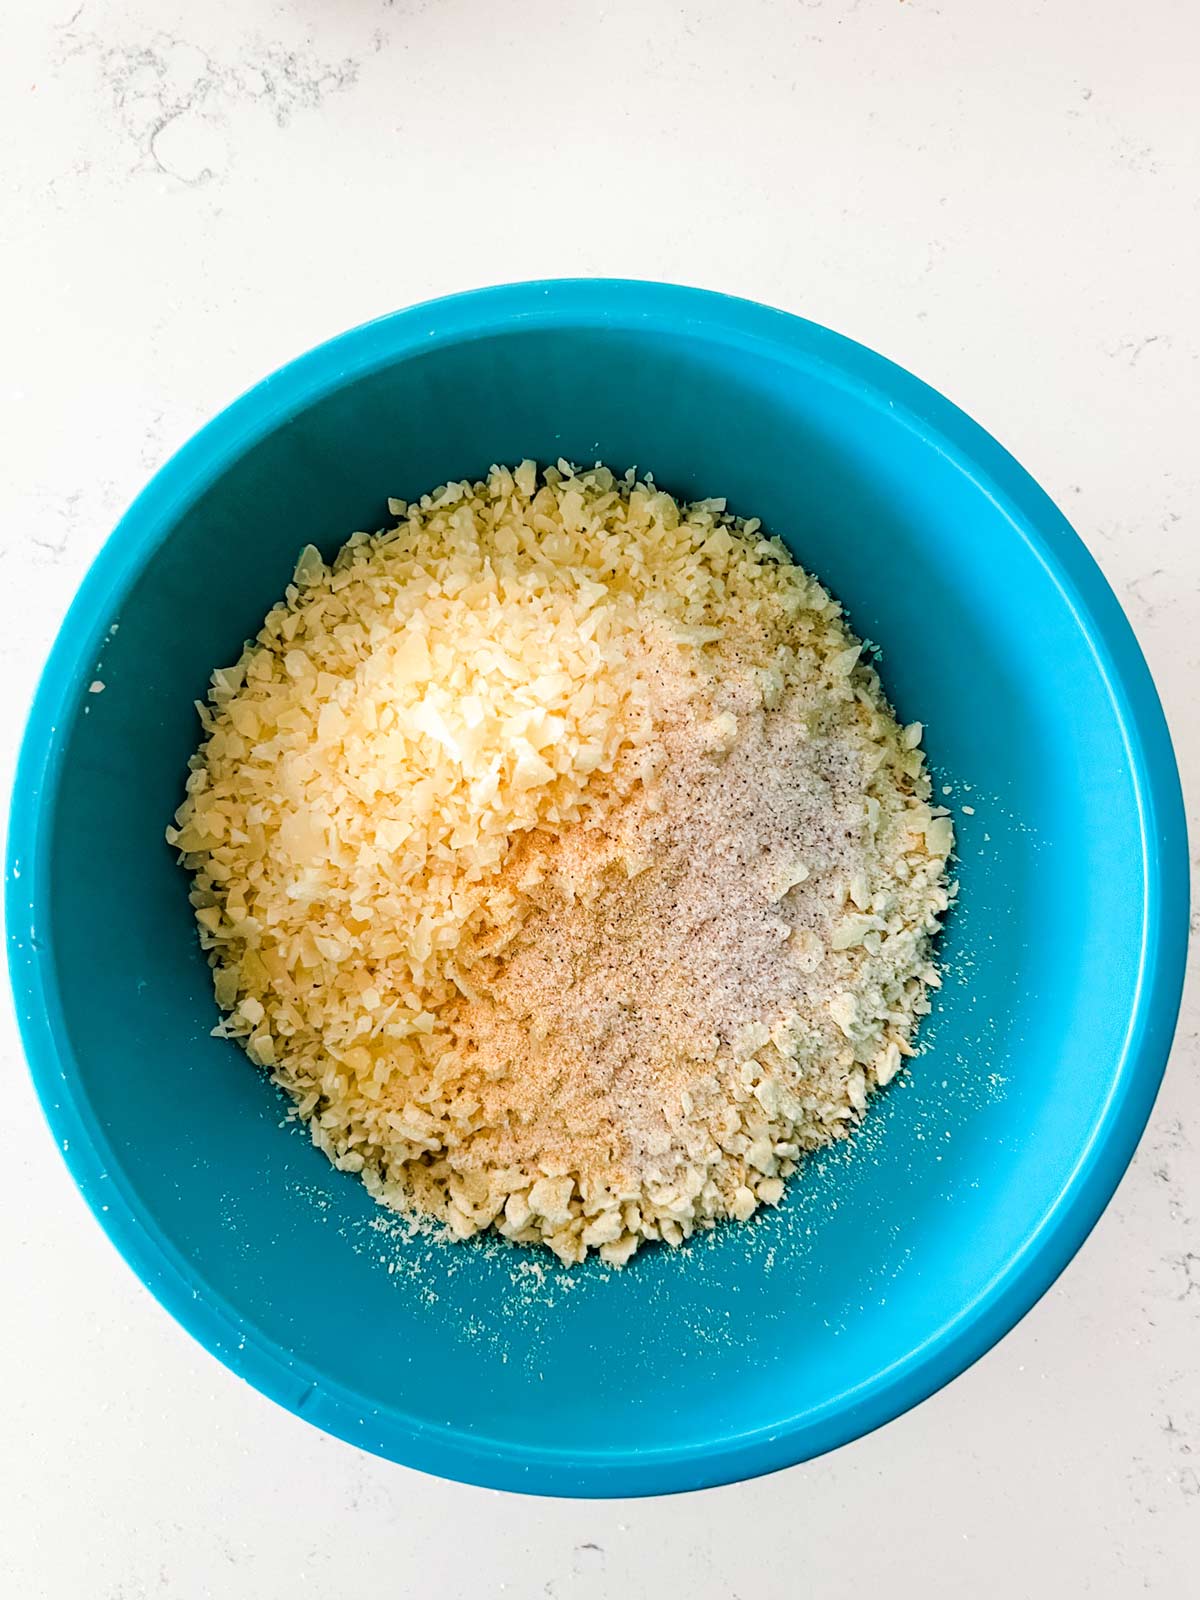 Crushed saltine crackers, parmesan, garlic powder, and salt in a mixing bowl.